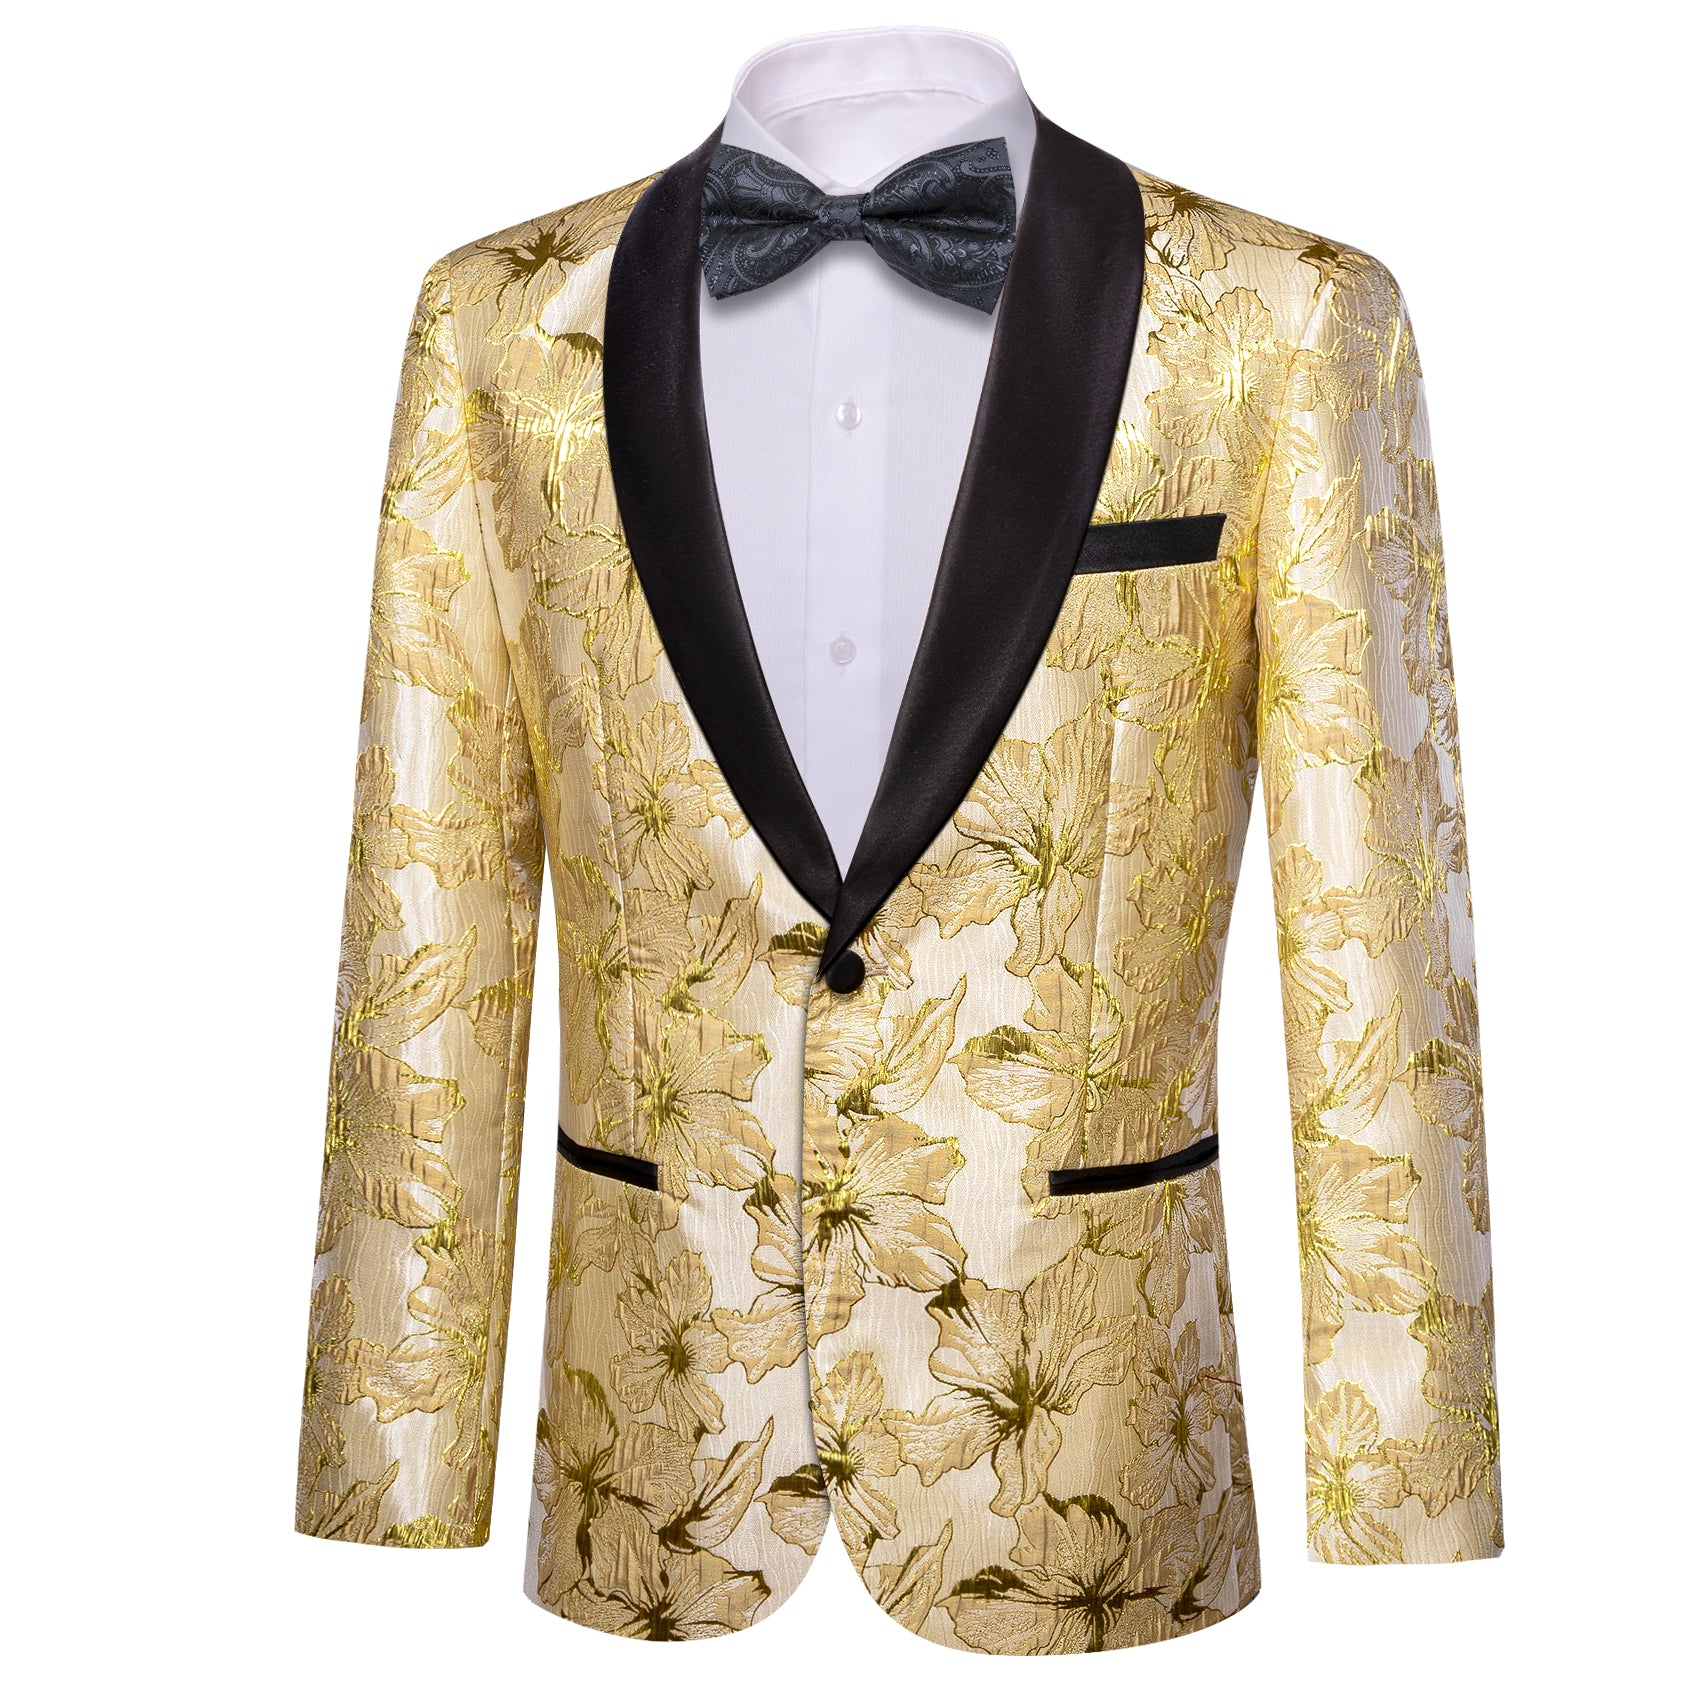 Men's Dress Party Gold Yellow Floral Suit Jacket Slim One Button Stylish Blazer